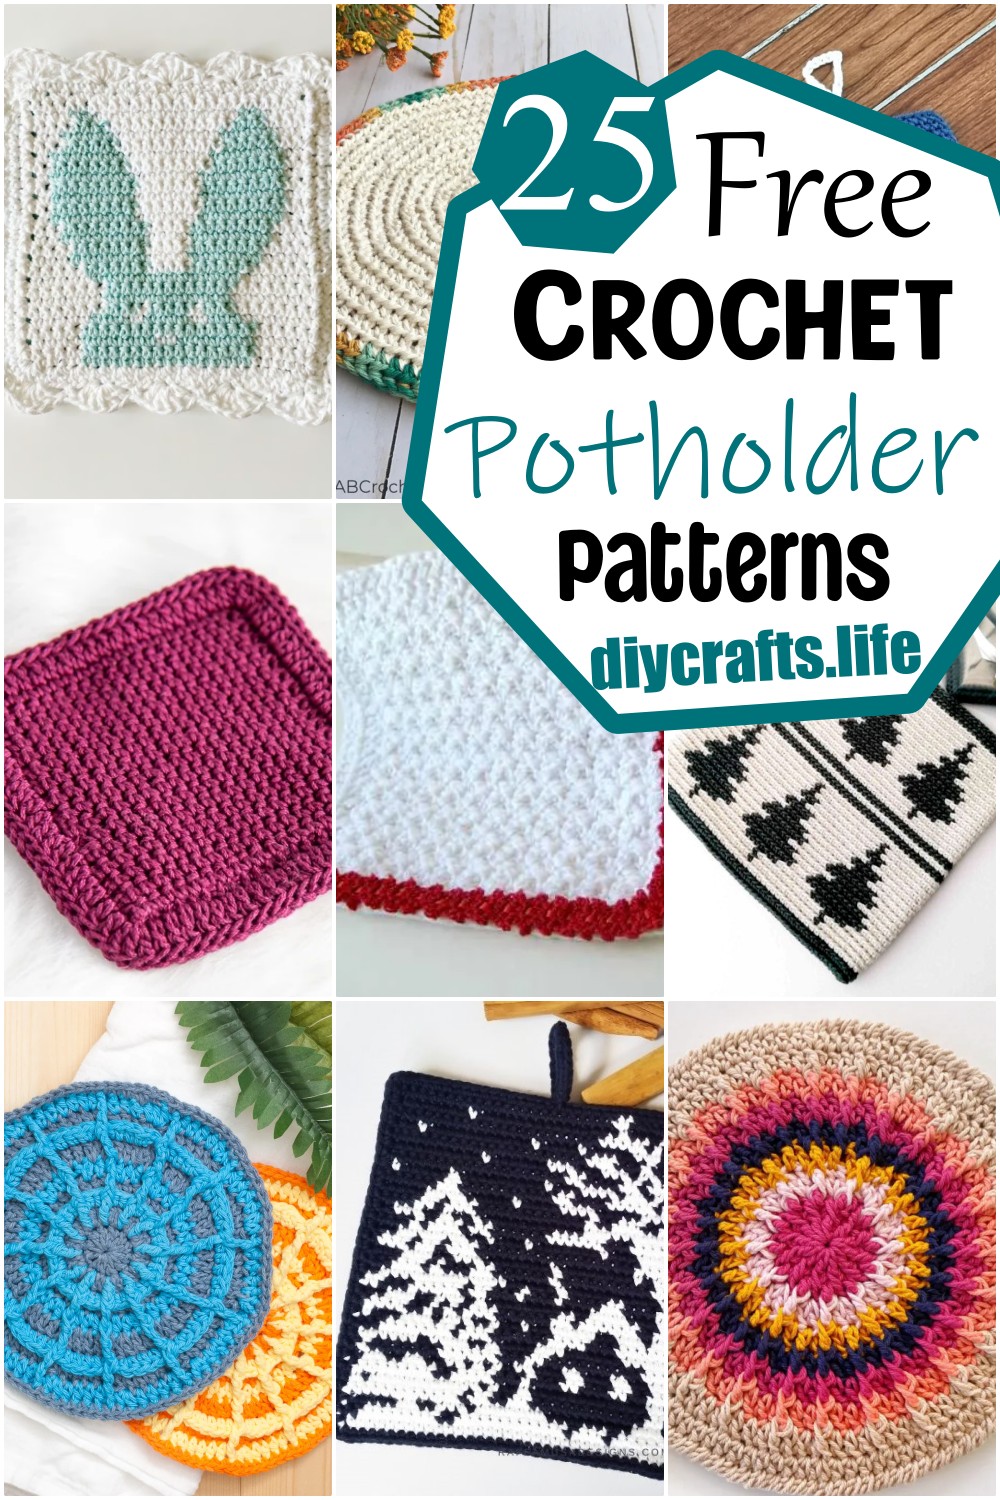 25 Free Crochet Potholder Patterns